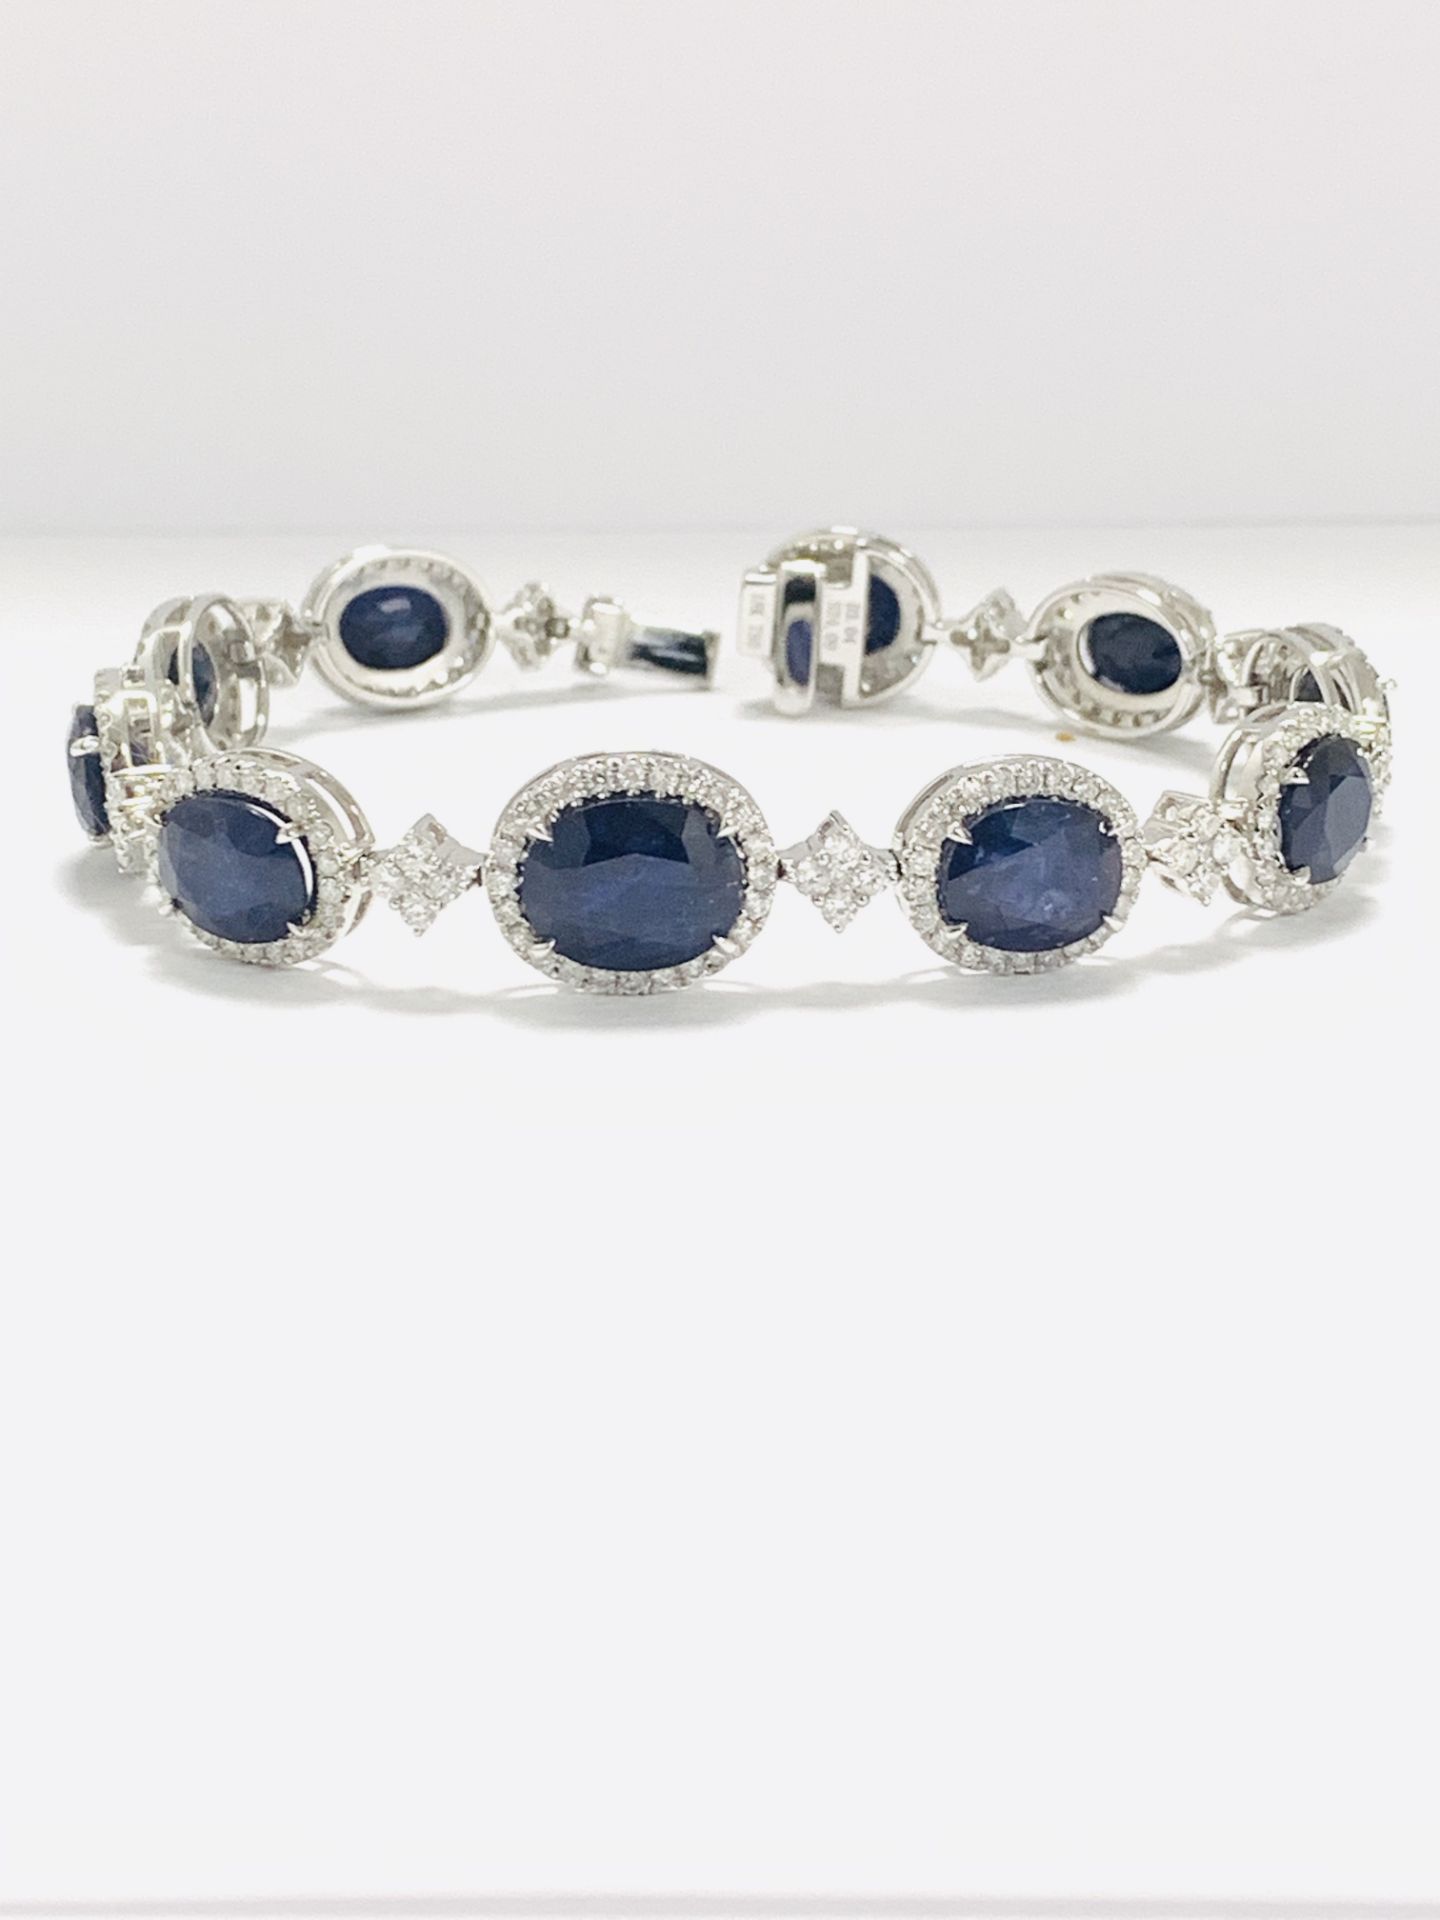 18ct White Gold Sapphire and Diamond Bracelet - Image 2 of 21